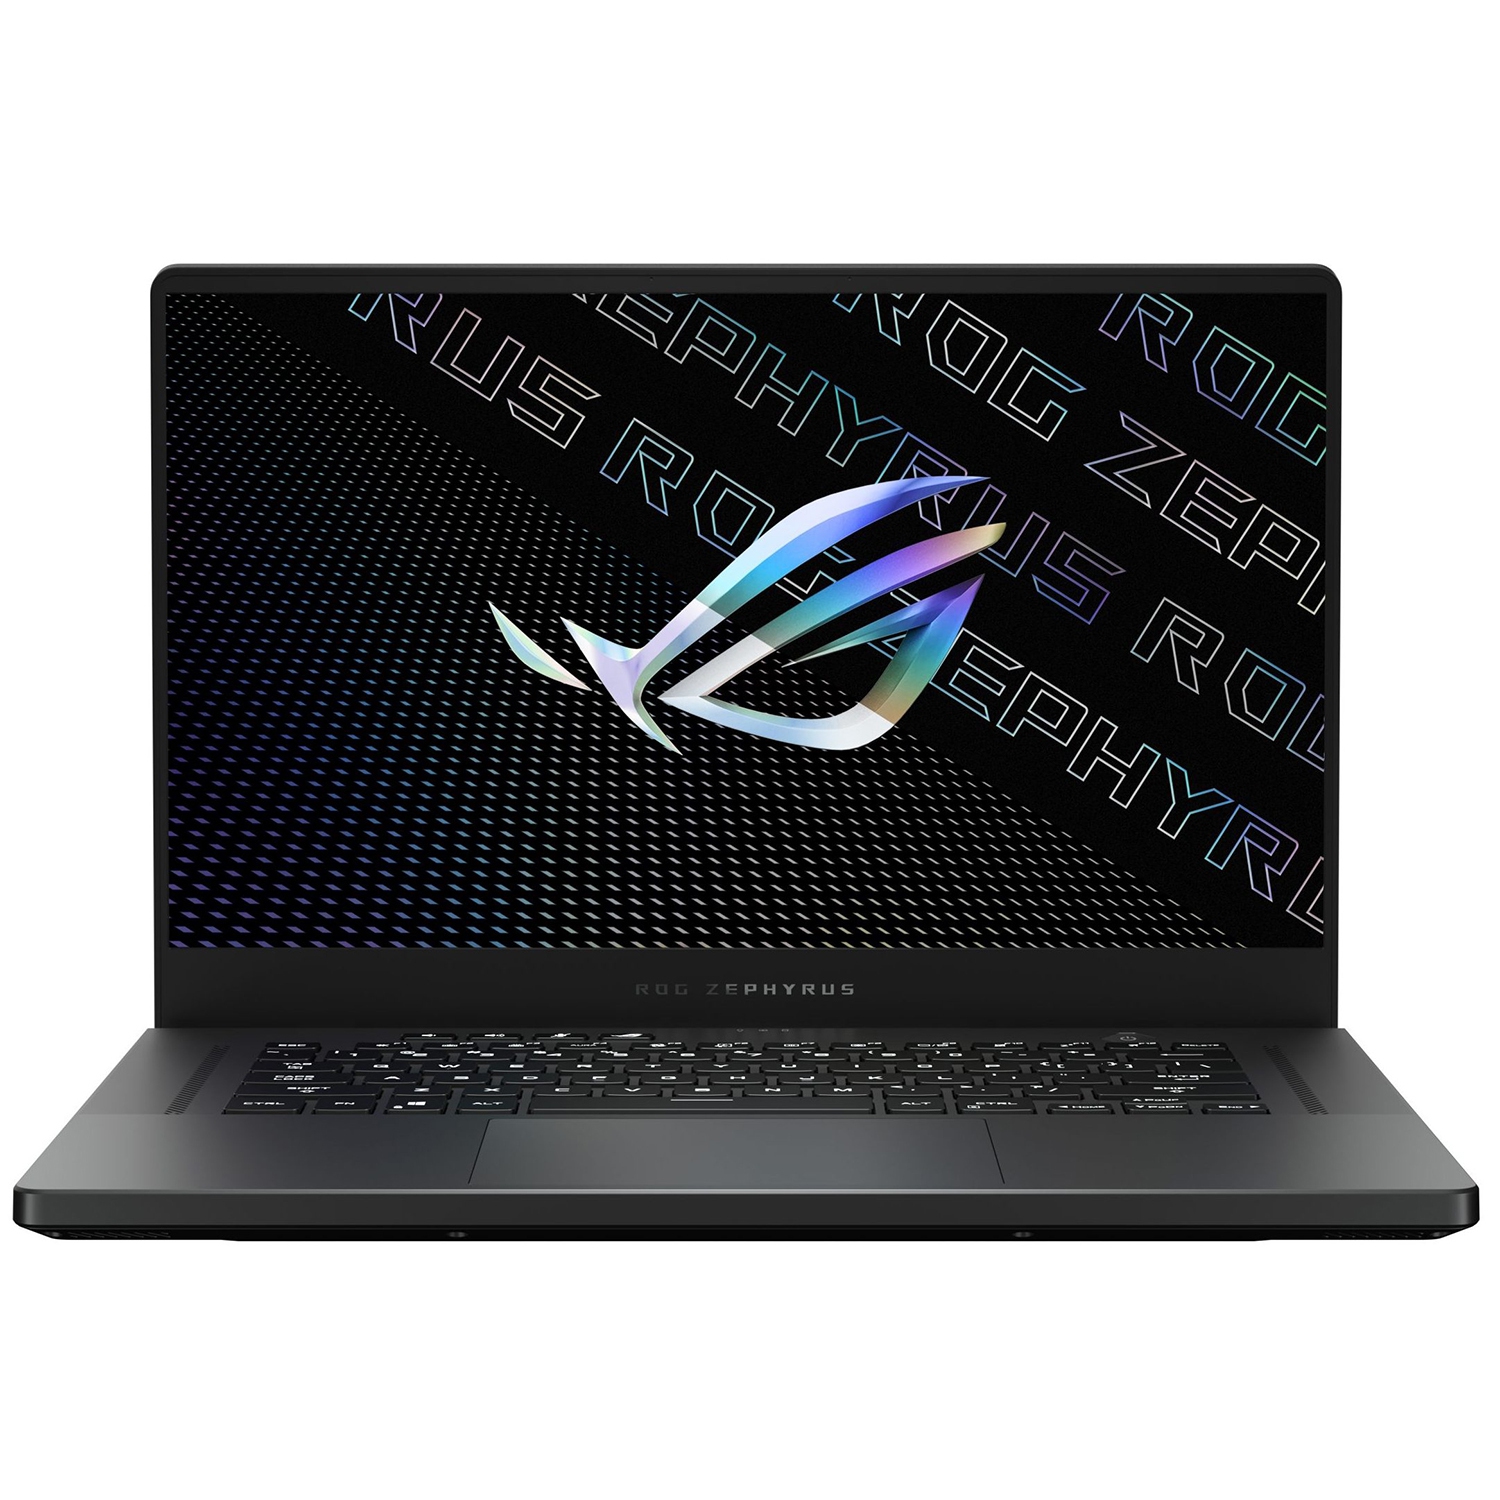 Custom ASUS ROG Zephyrus G15 Laptop (AMD Ryzen 9 5900HS, 8GB RAM, 2TB PCIe SSD, NVIDIA RTX 3060, Win 10 Home)